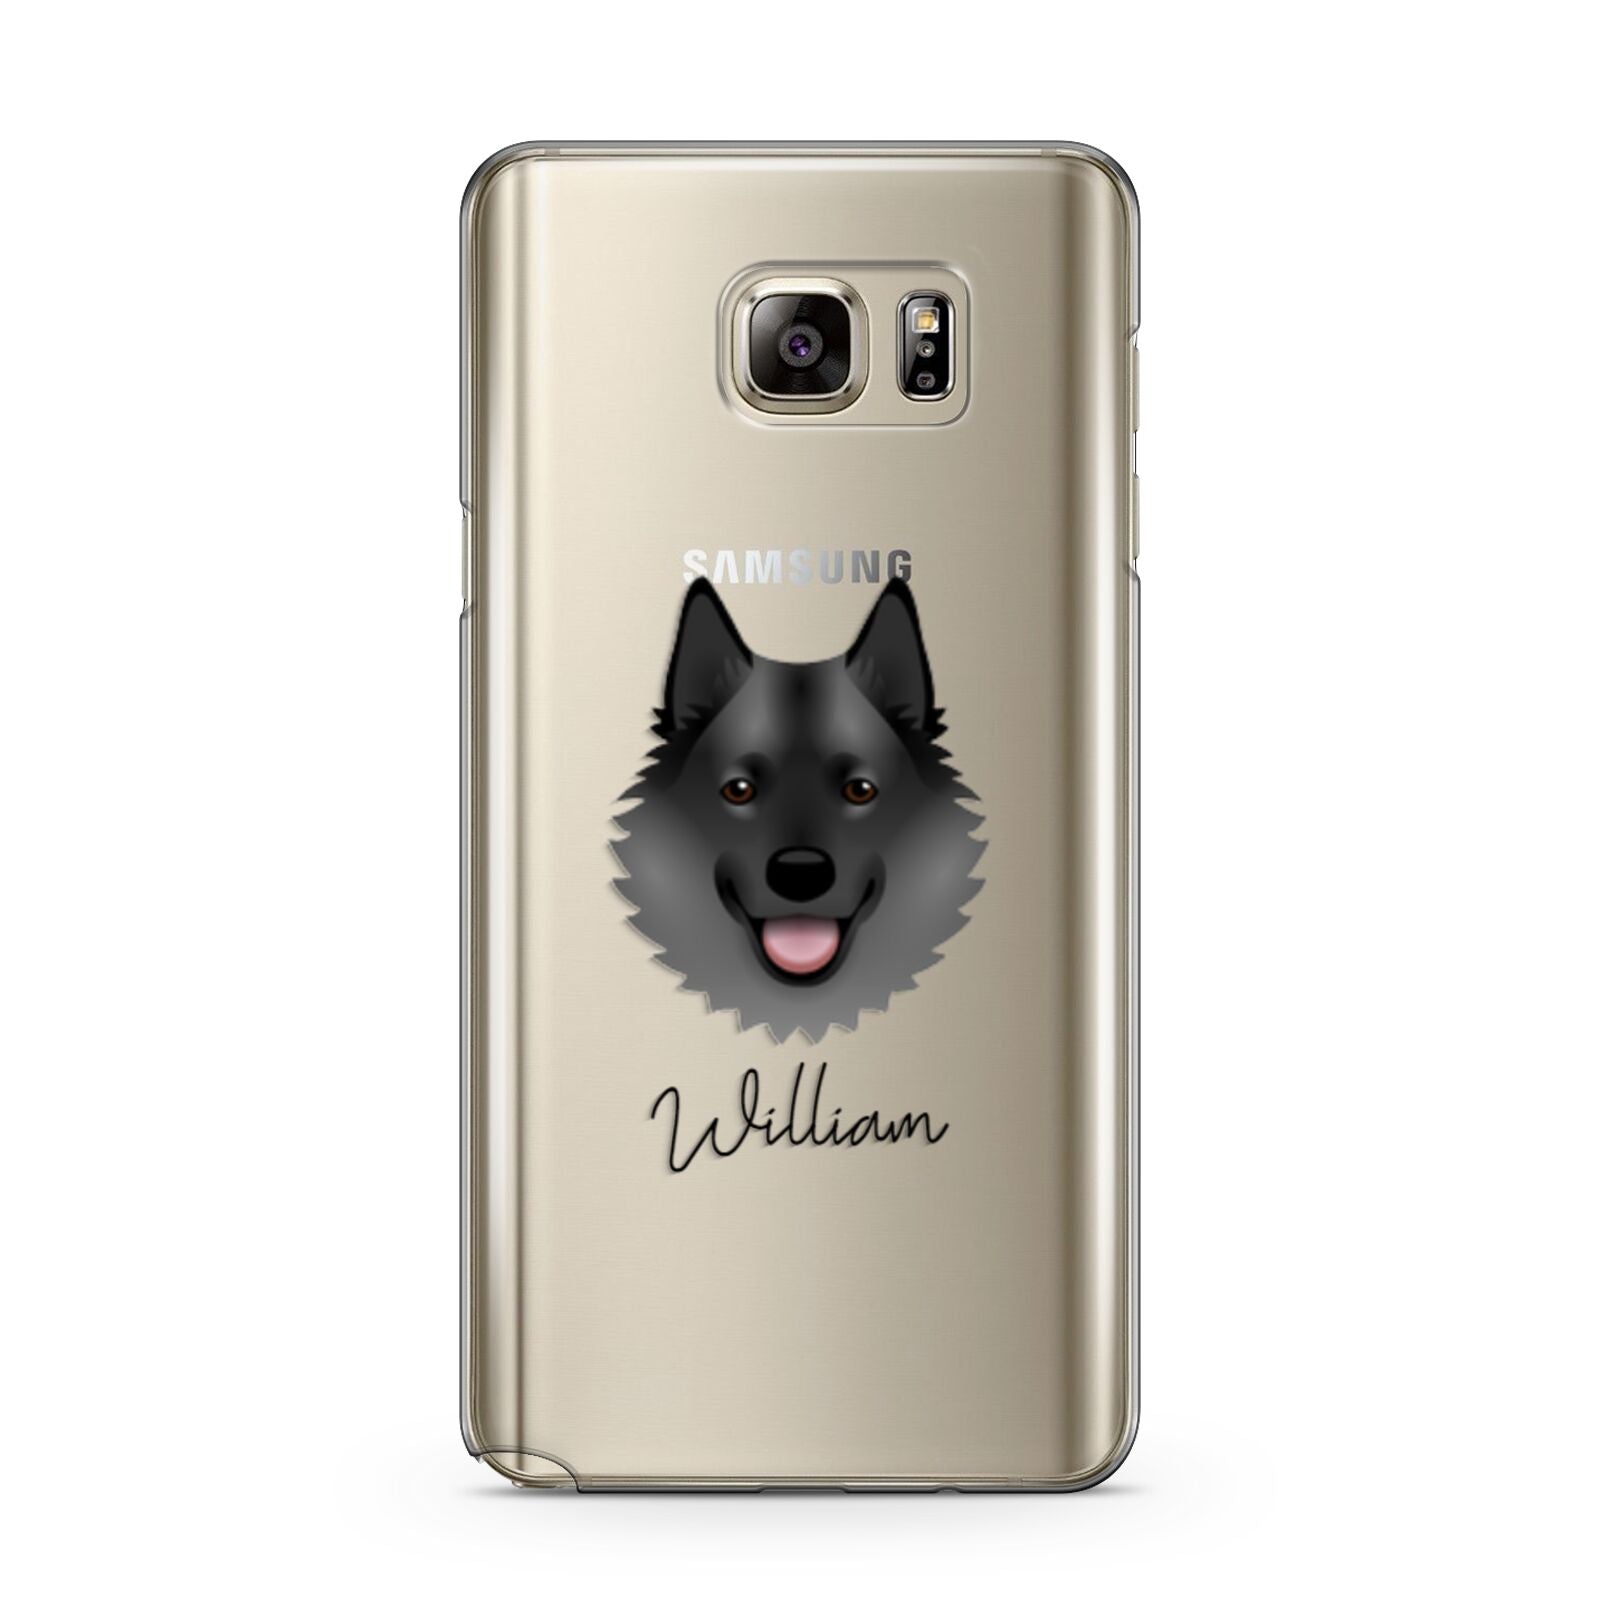 Norwegian Elkhound Personalised Samsung Galaxy Note 5 Case